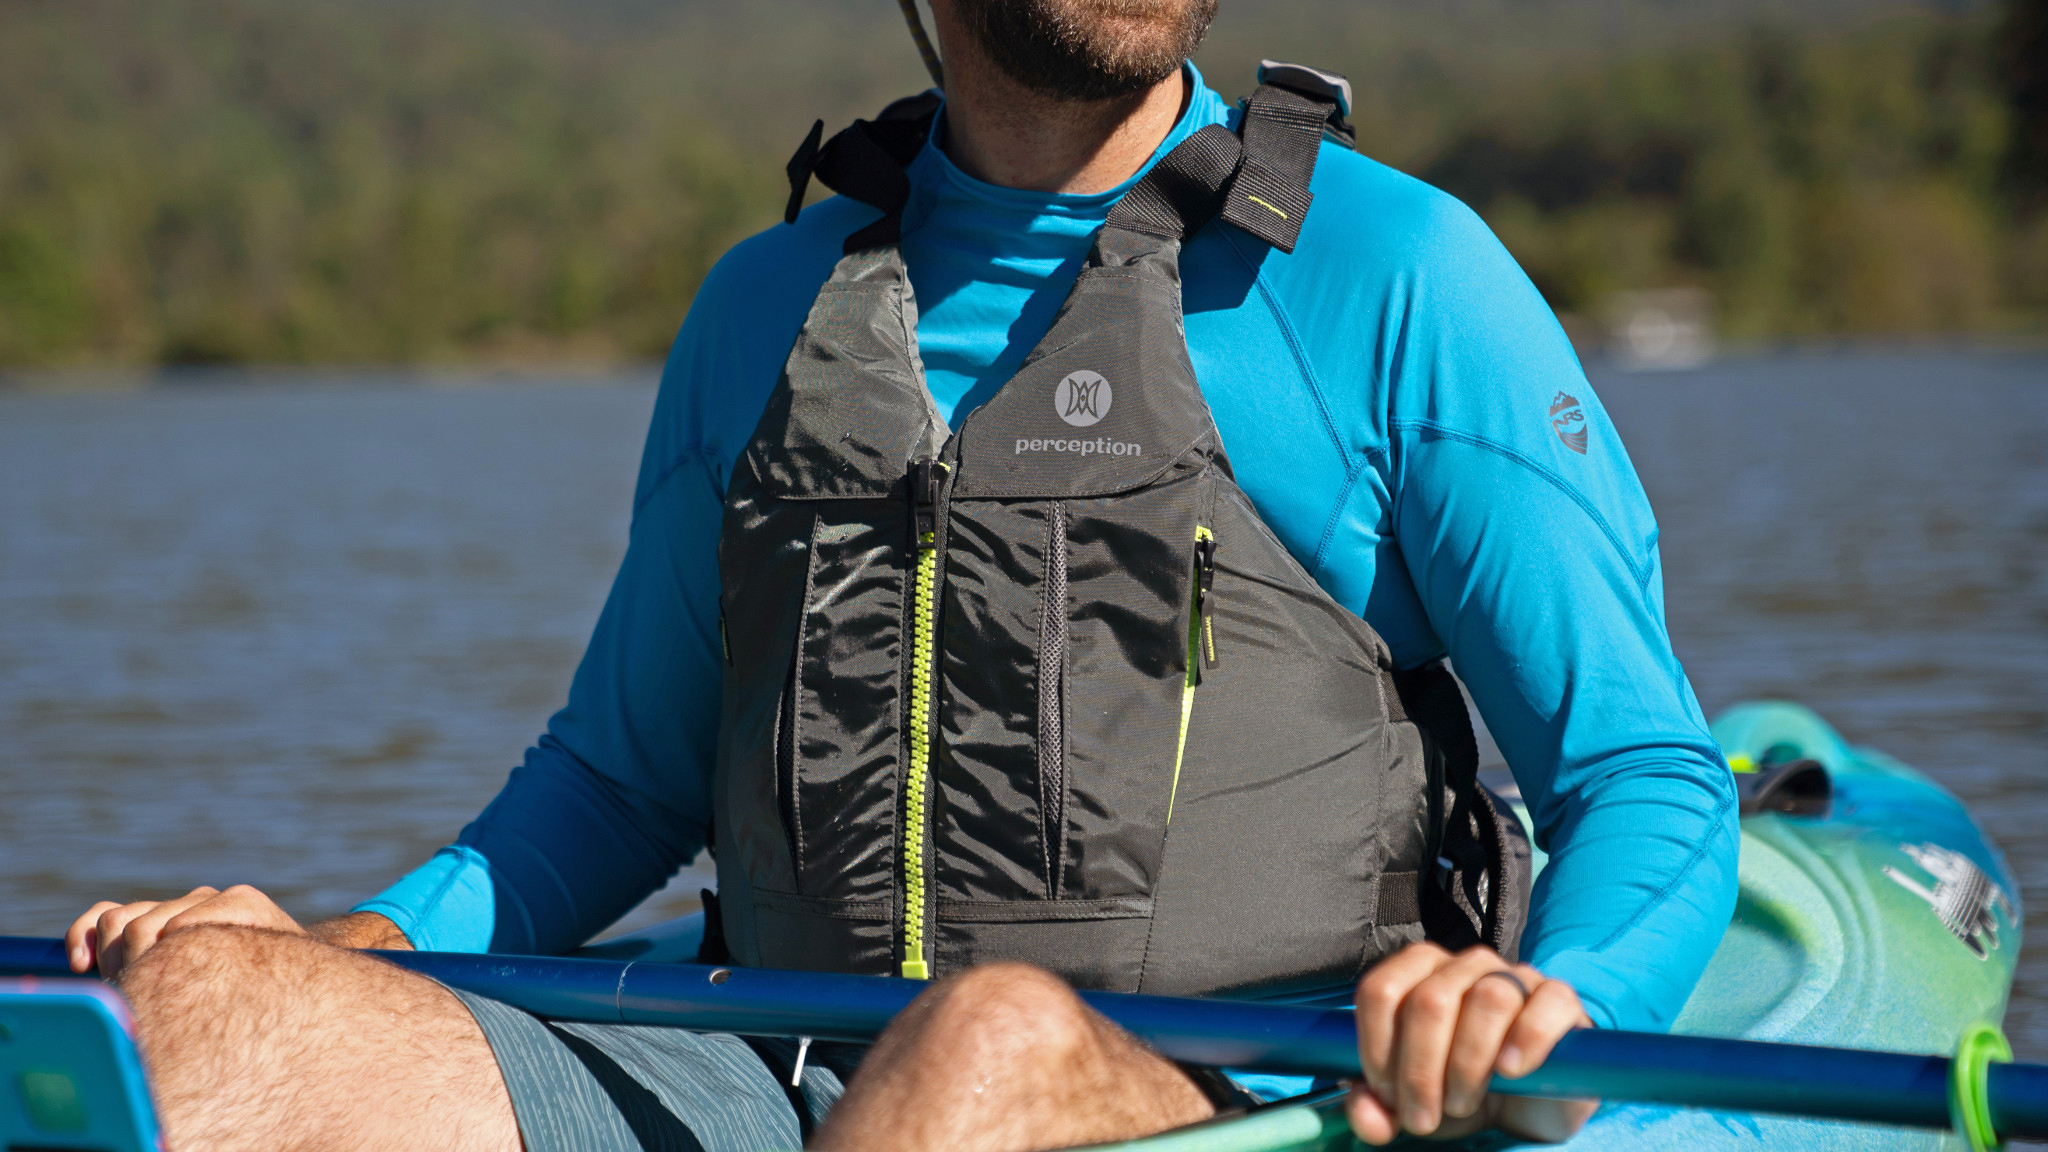 Kayak Canoe Accessories Supplies Boating Rafting Coffee Mug